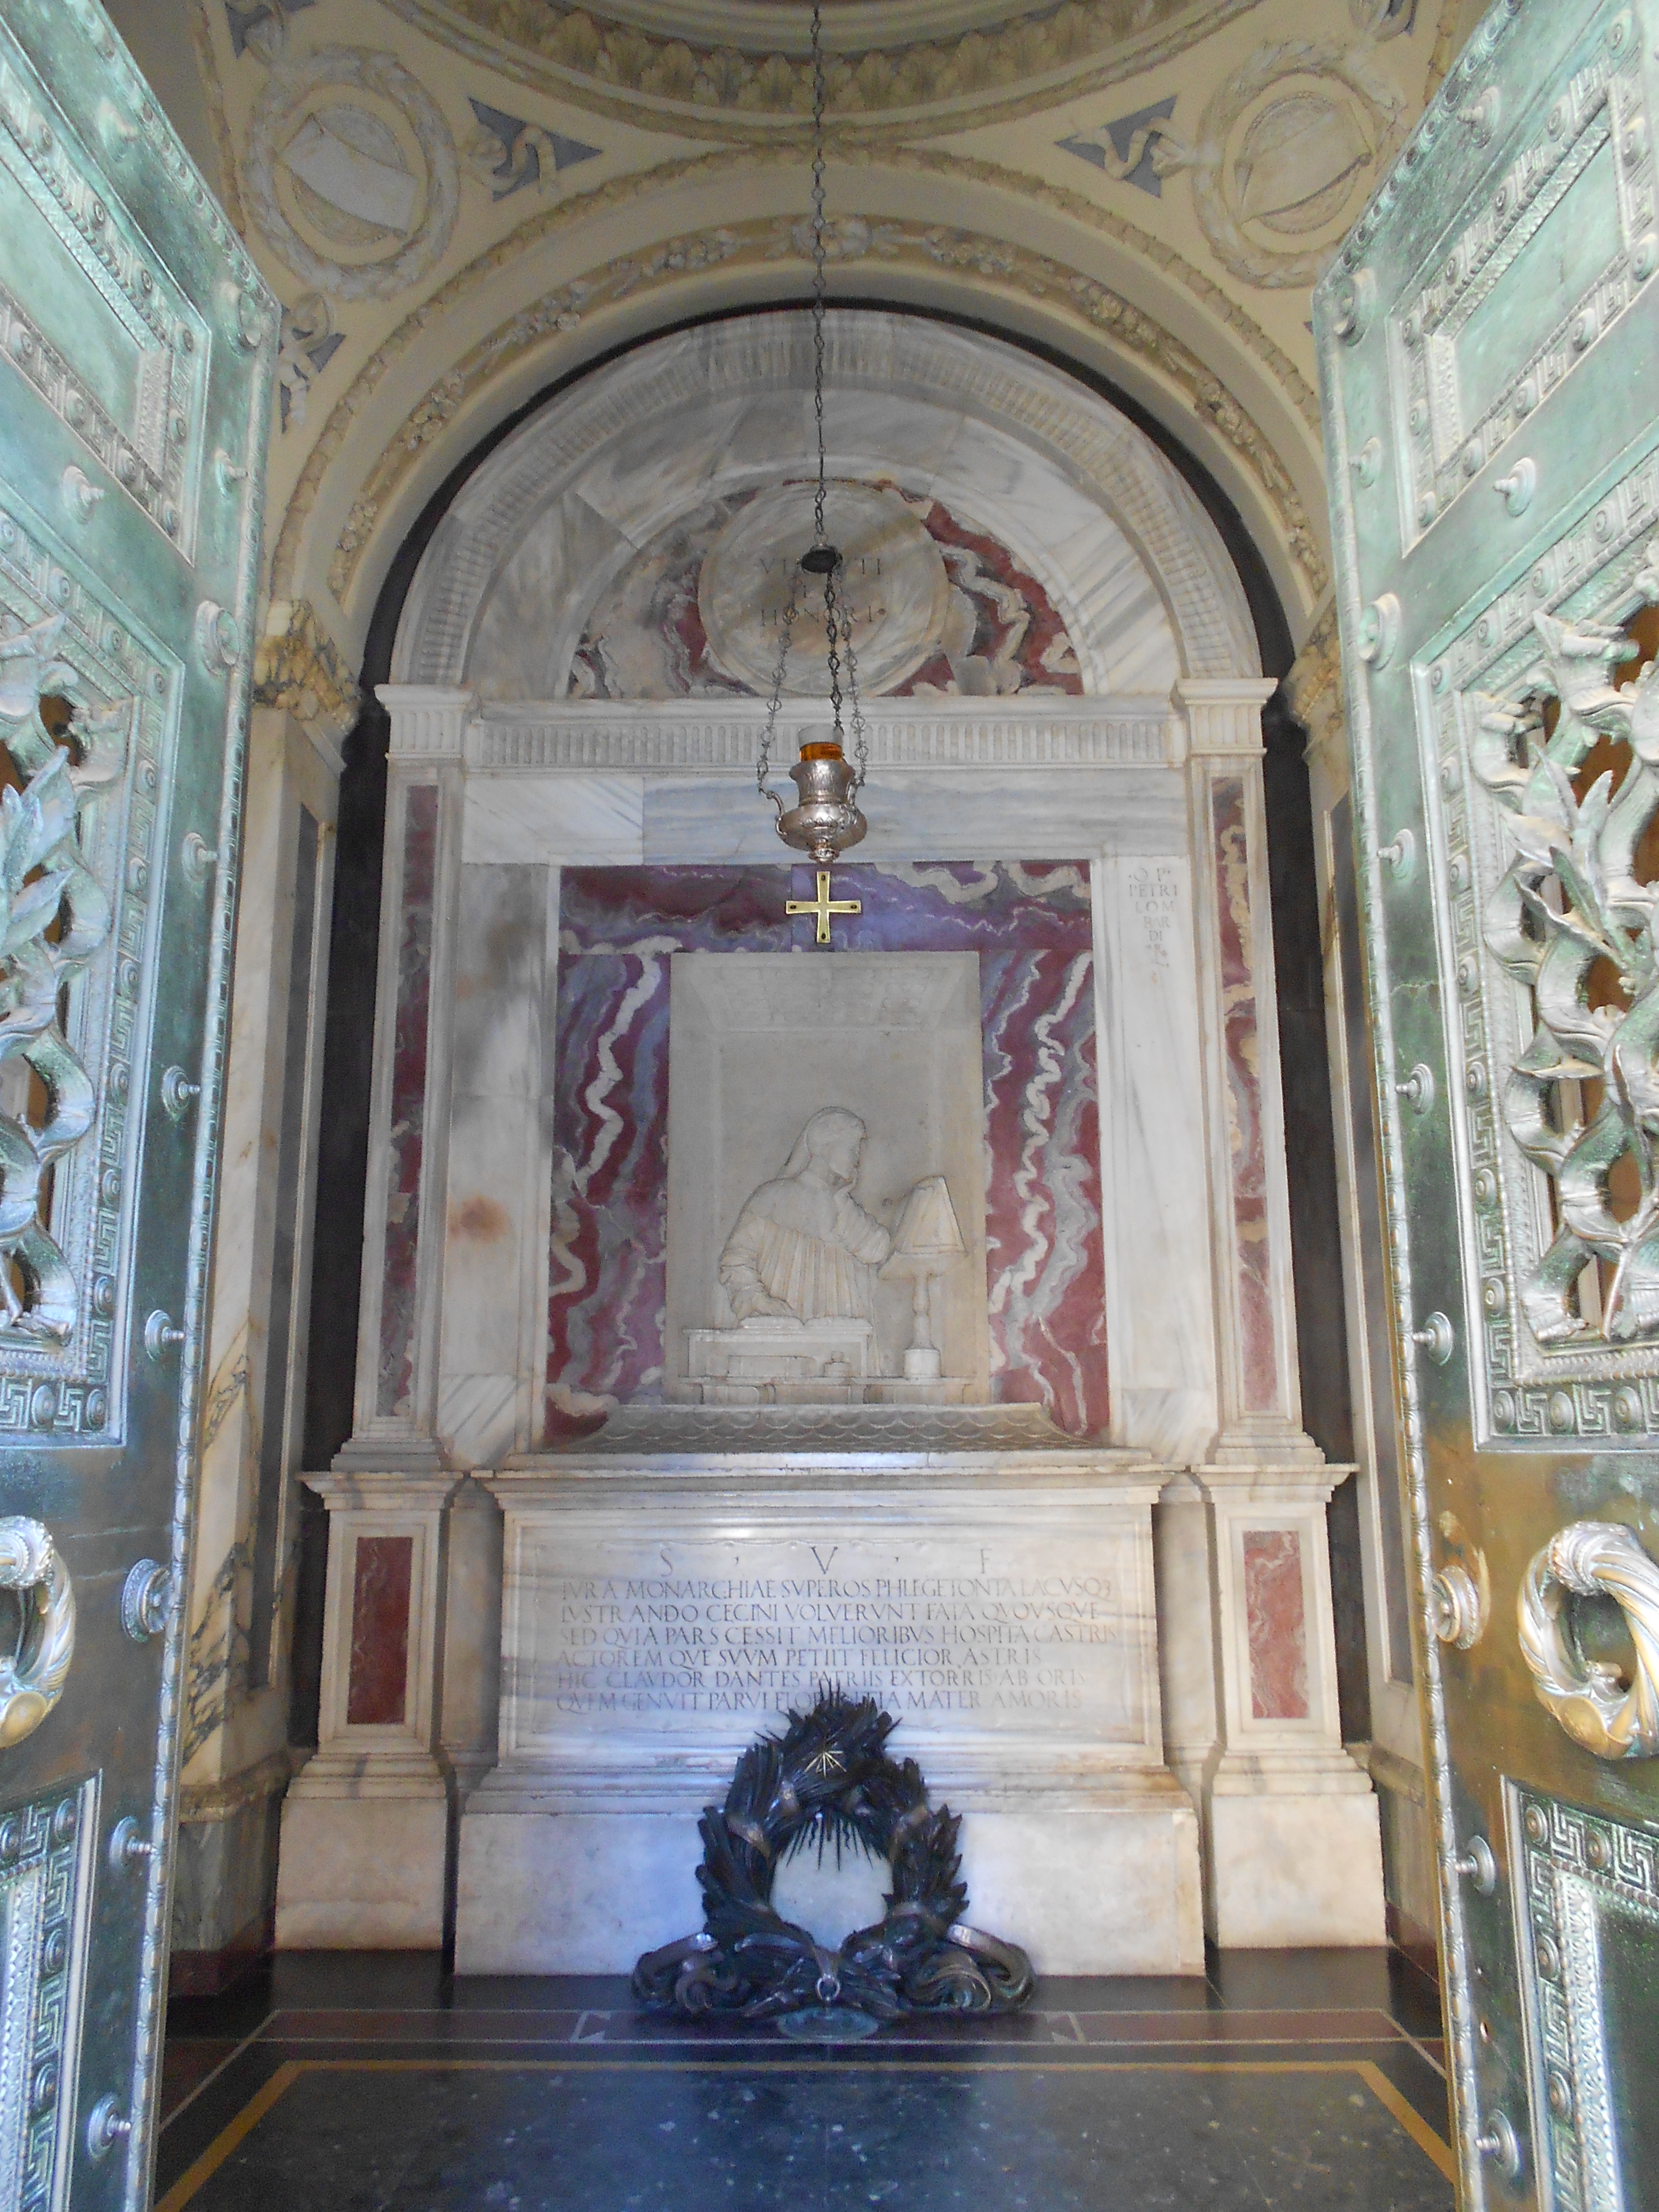 foto: https://upload.wikimedia.org/wikipedia/commons/b/b5/Ravenna_-_Tomba_di_Dante.jpg